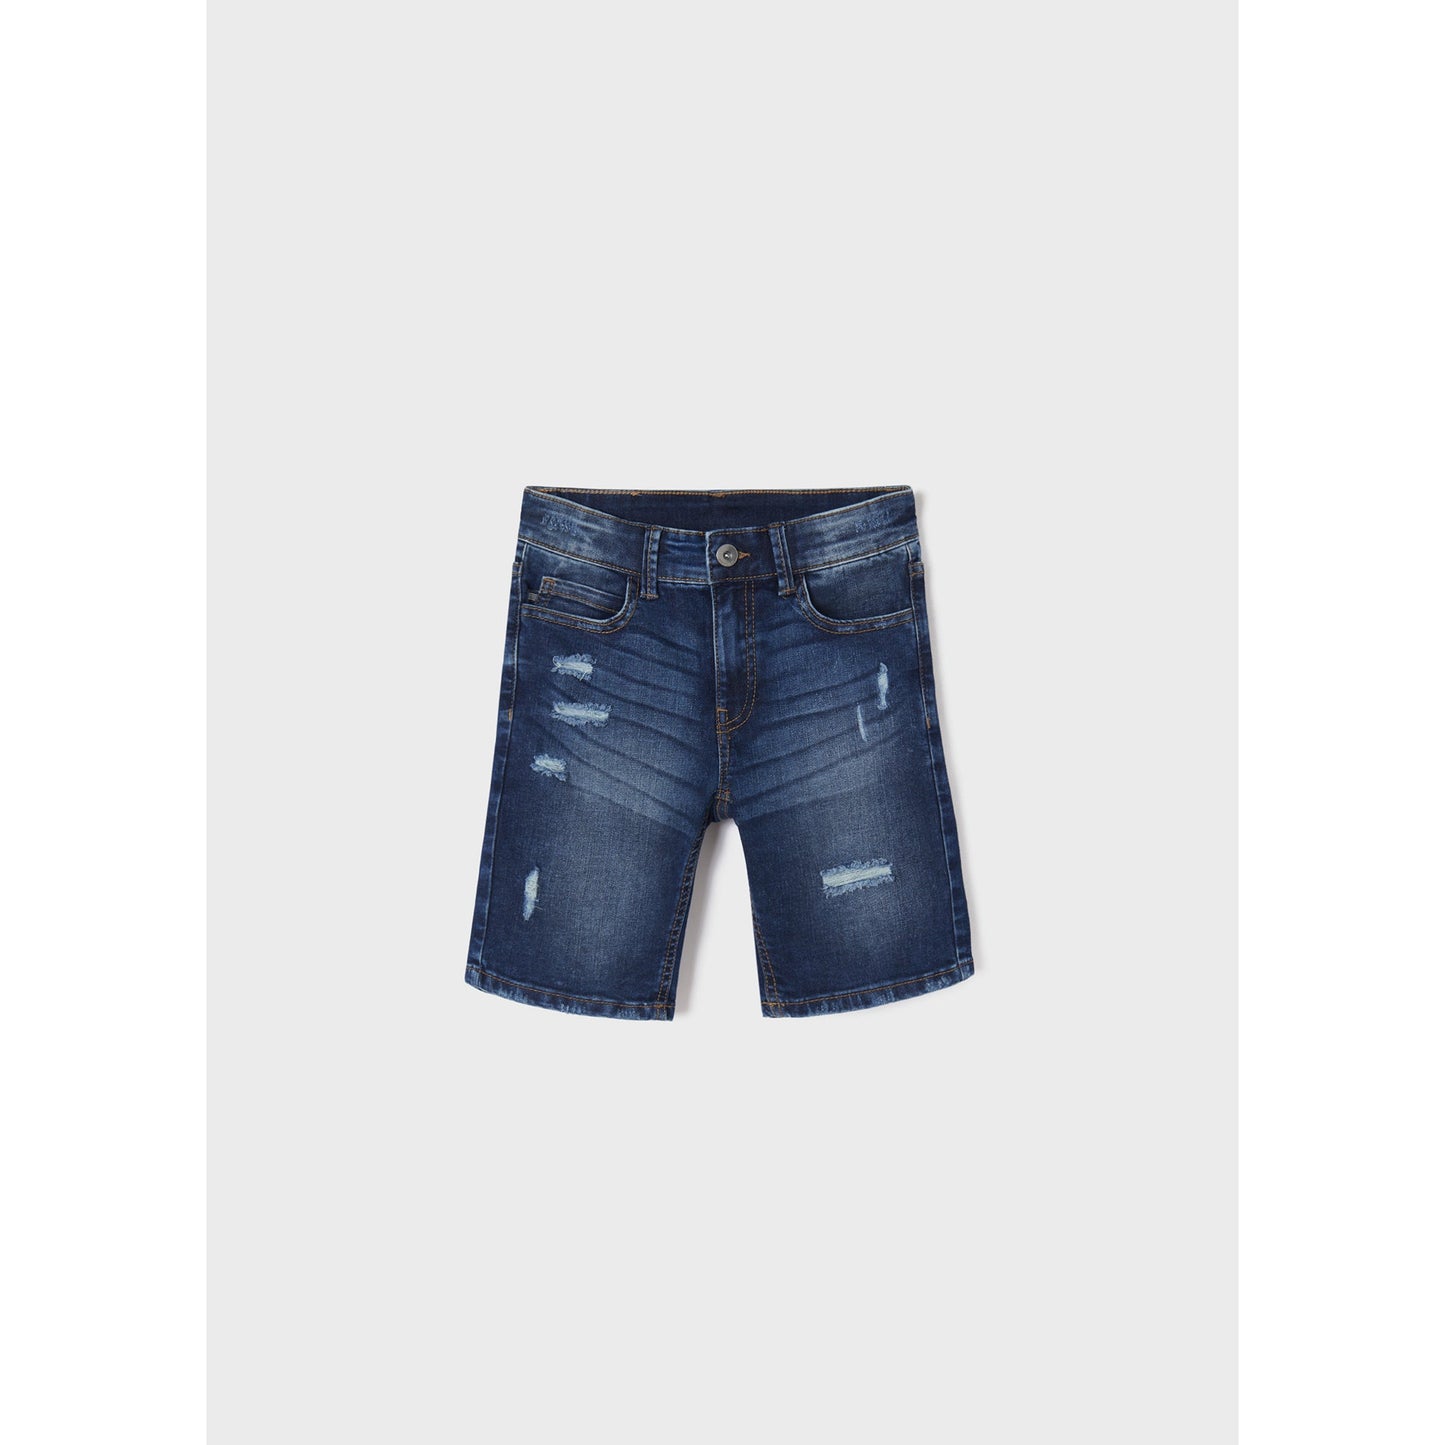 Nukutavake Boys Bermuda Distressed Denim Shorts _Dark Blue 6215-73